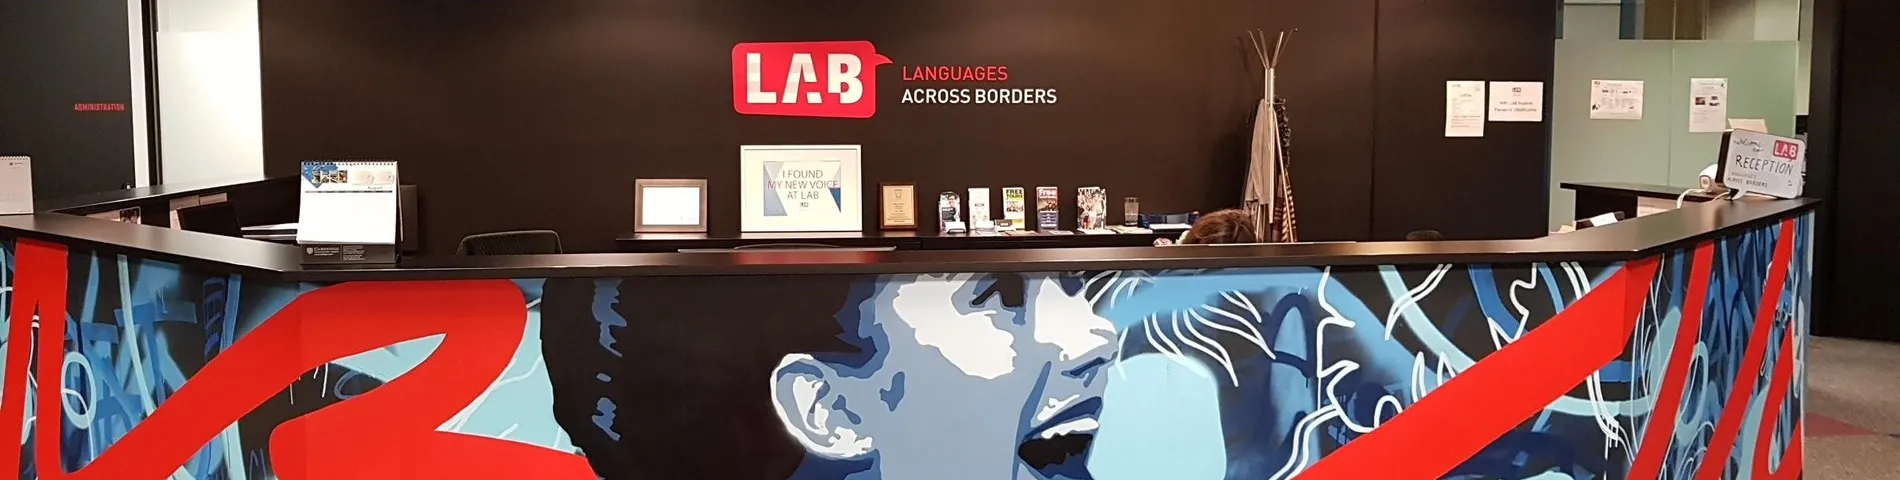 LAB - Languages Across Borders画像1